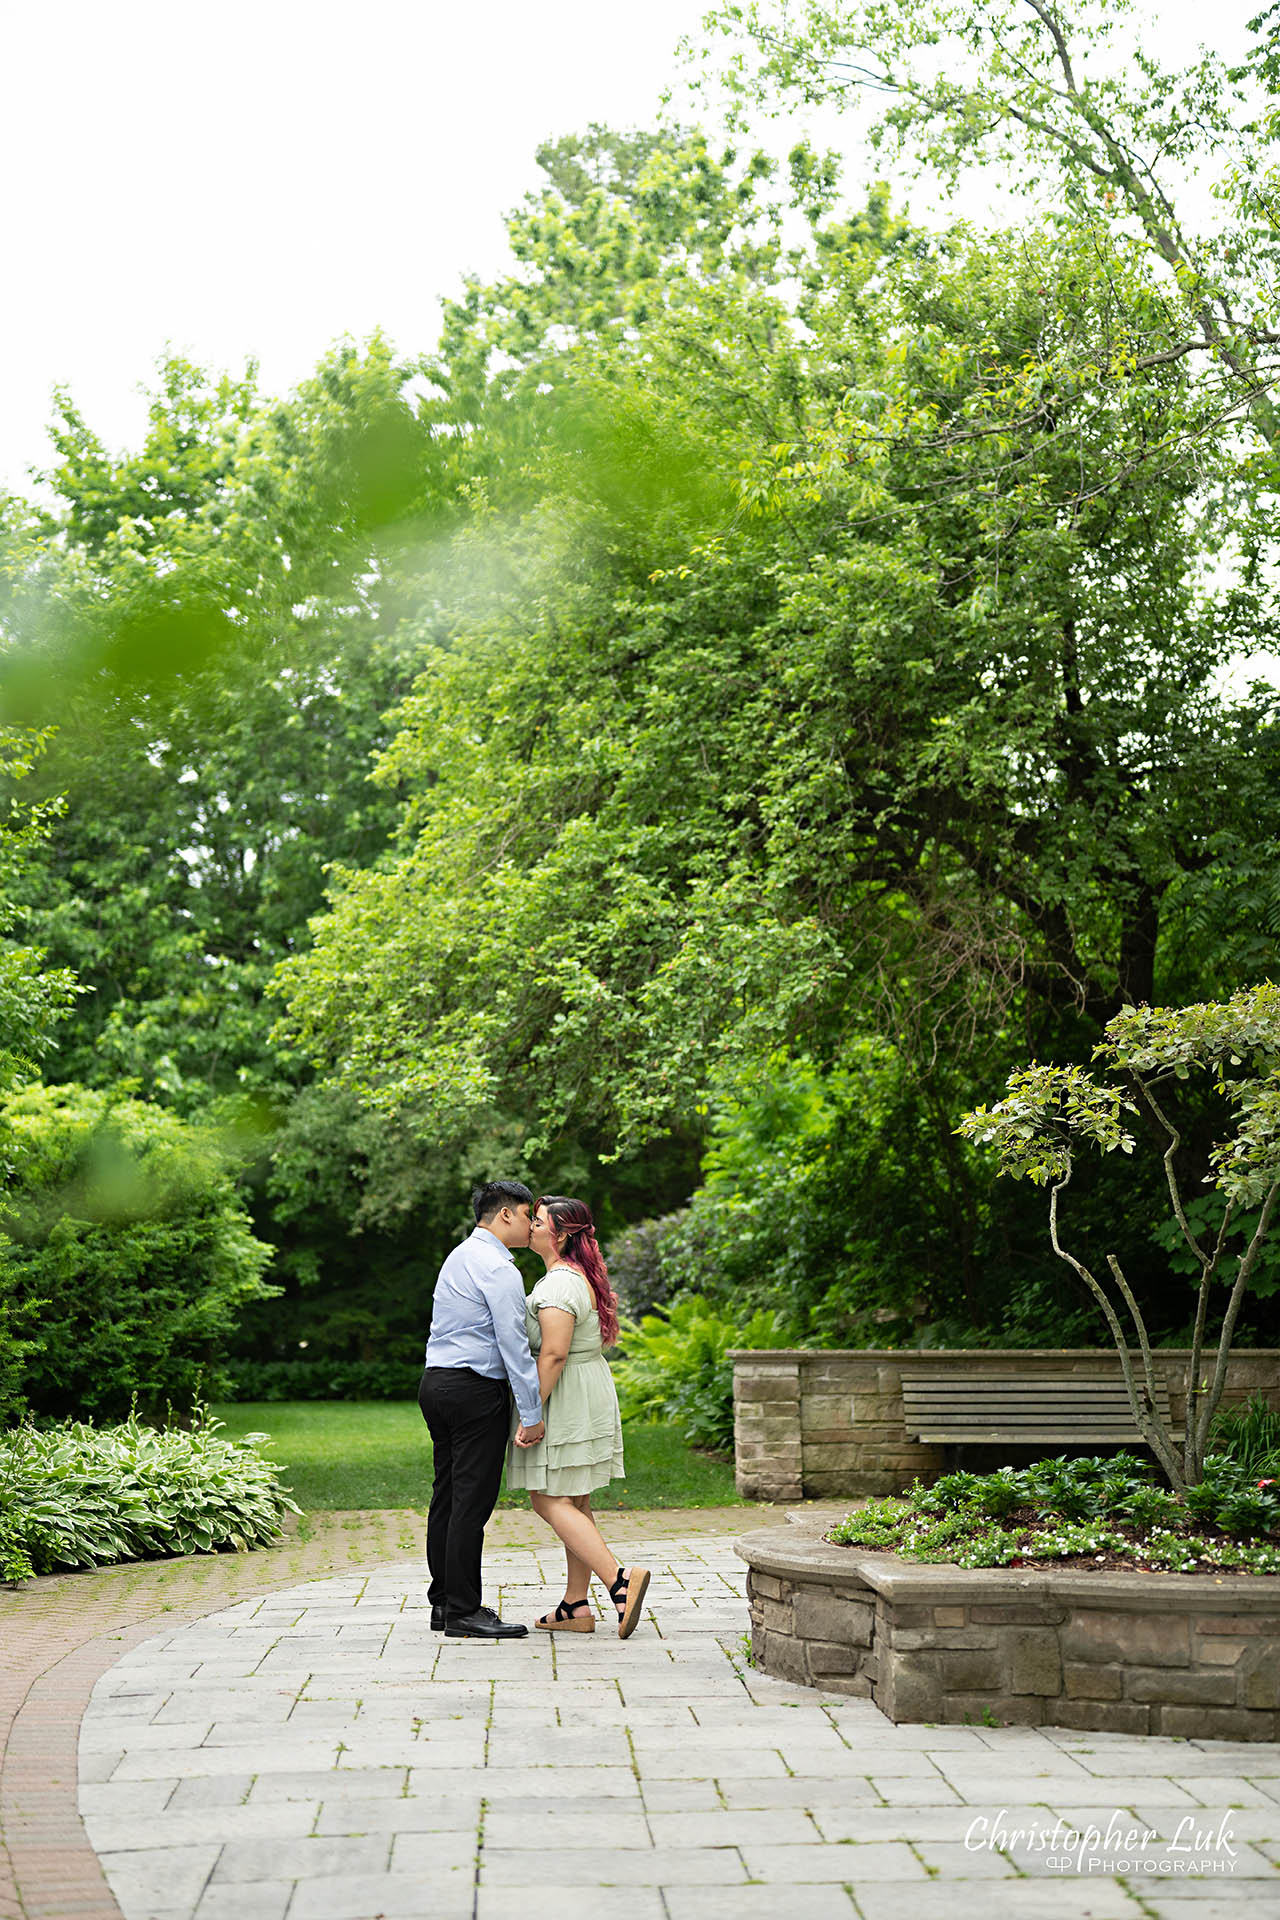 Adamson Estate Landscaped Garden Terrace Bride Groom Intimate Kiss Candid Organic Natural Photojournalistic Portrait